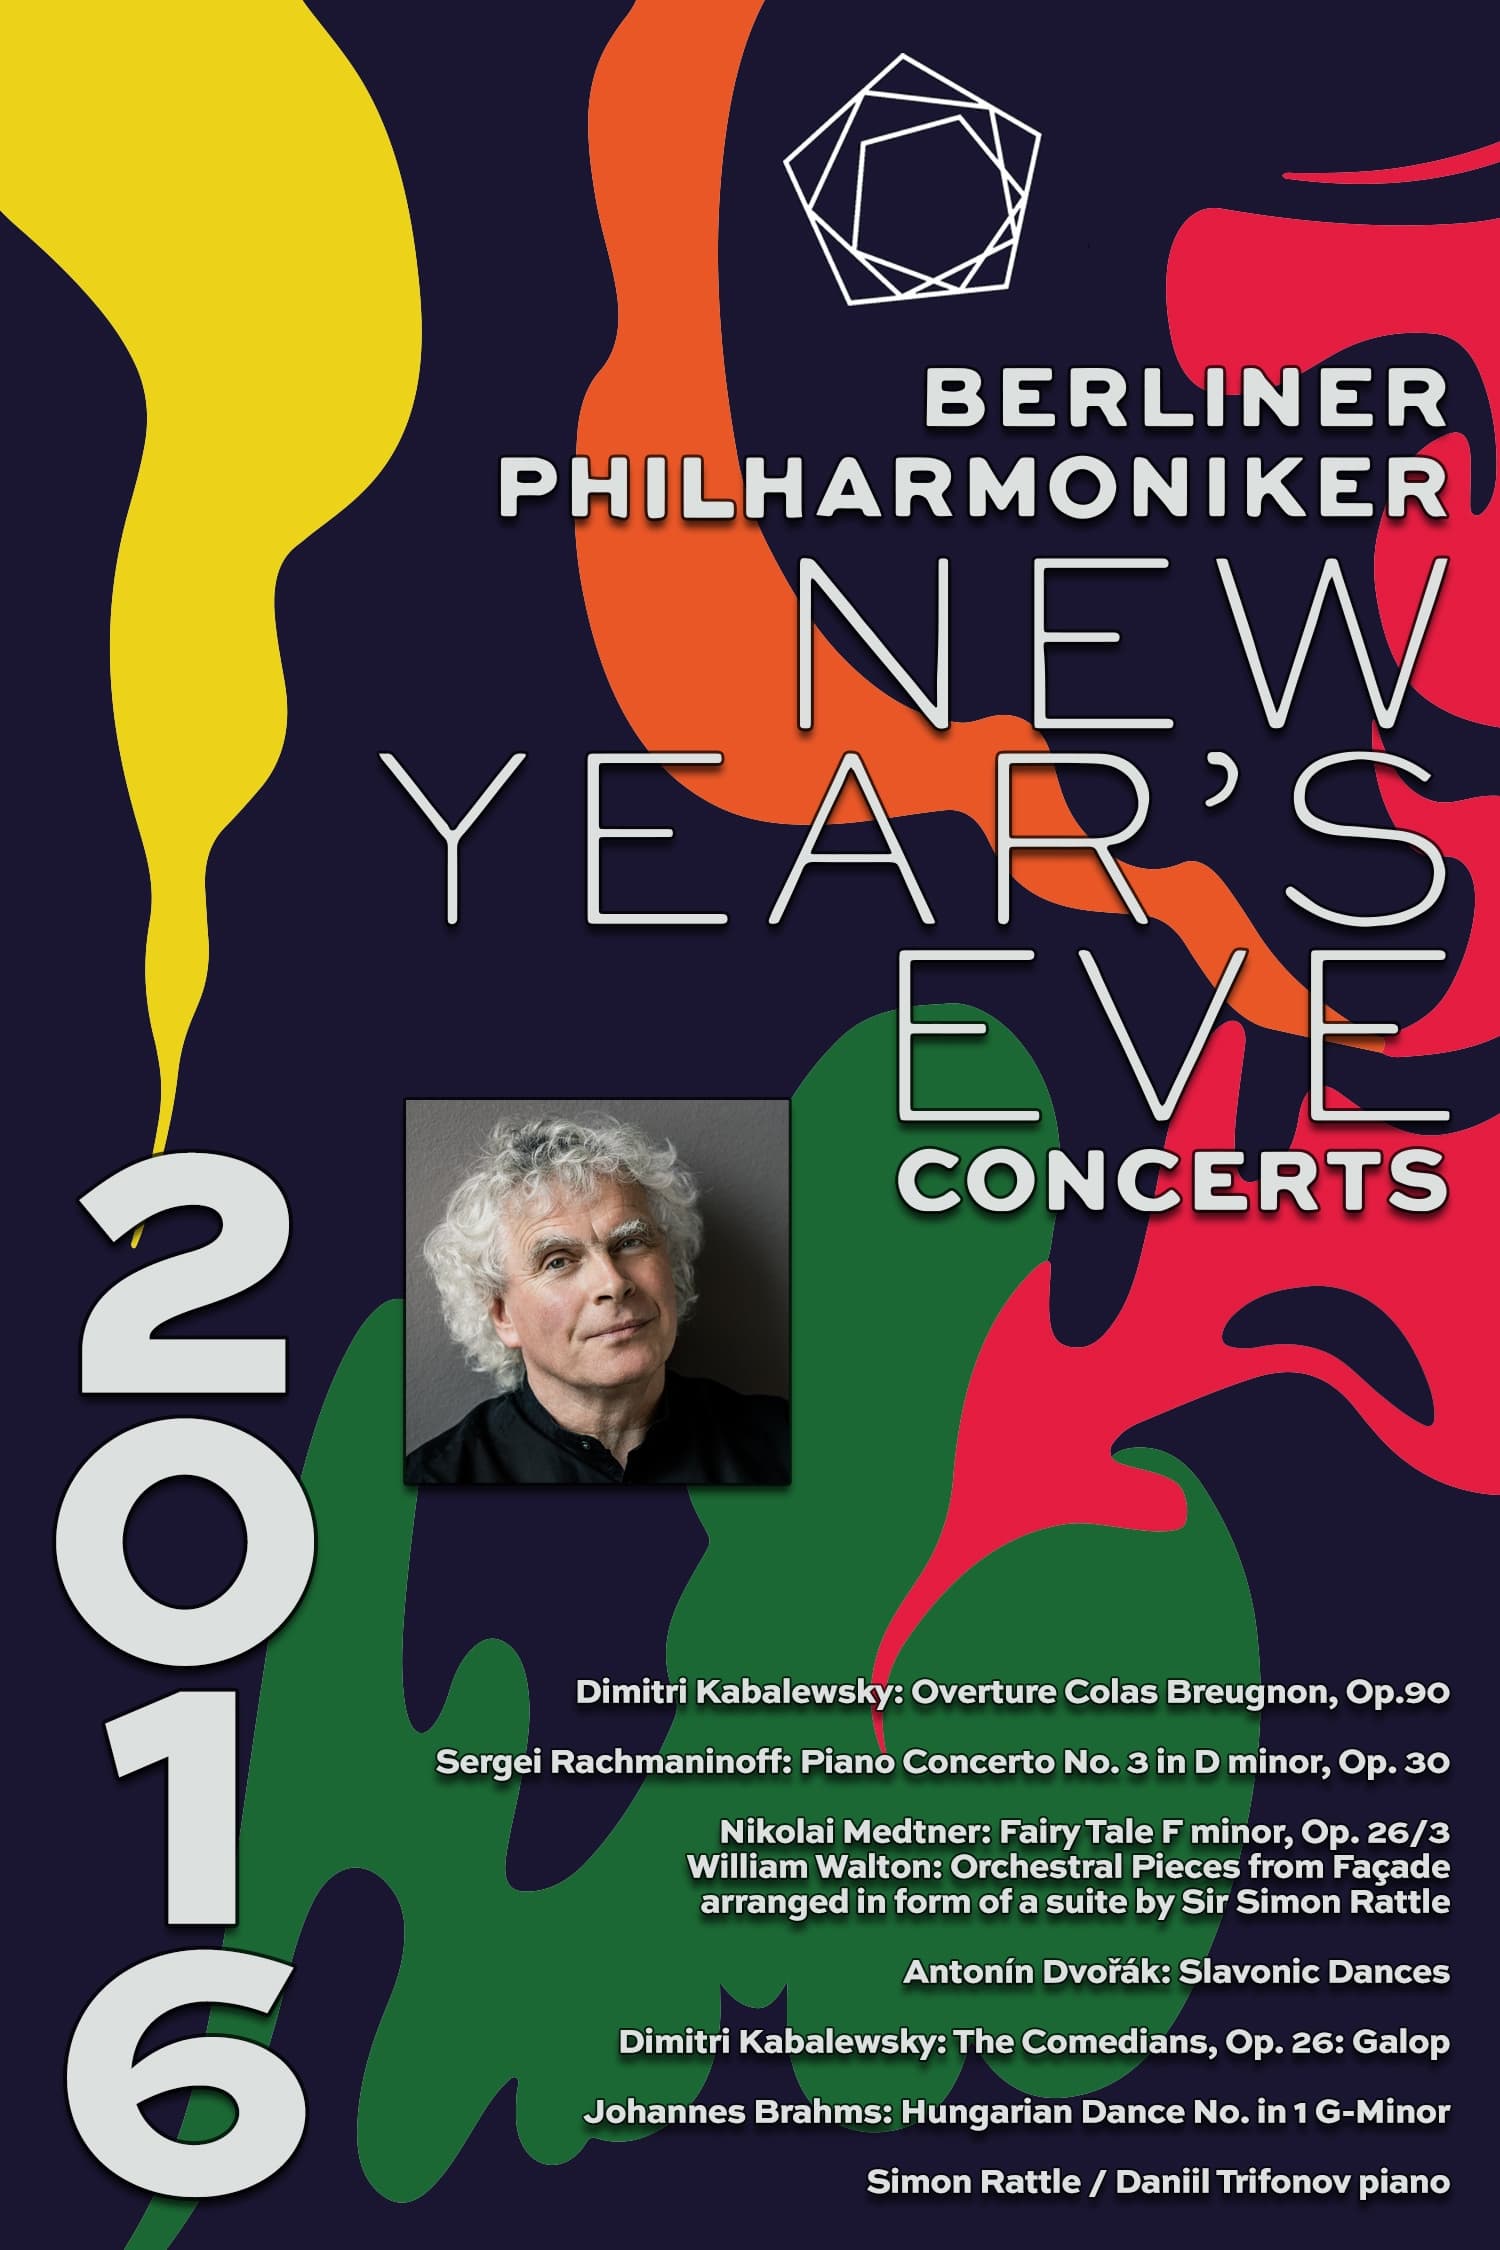 The Berliner Philharmoniker’s New Year’s Eve Concert: 2016